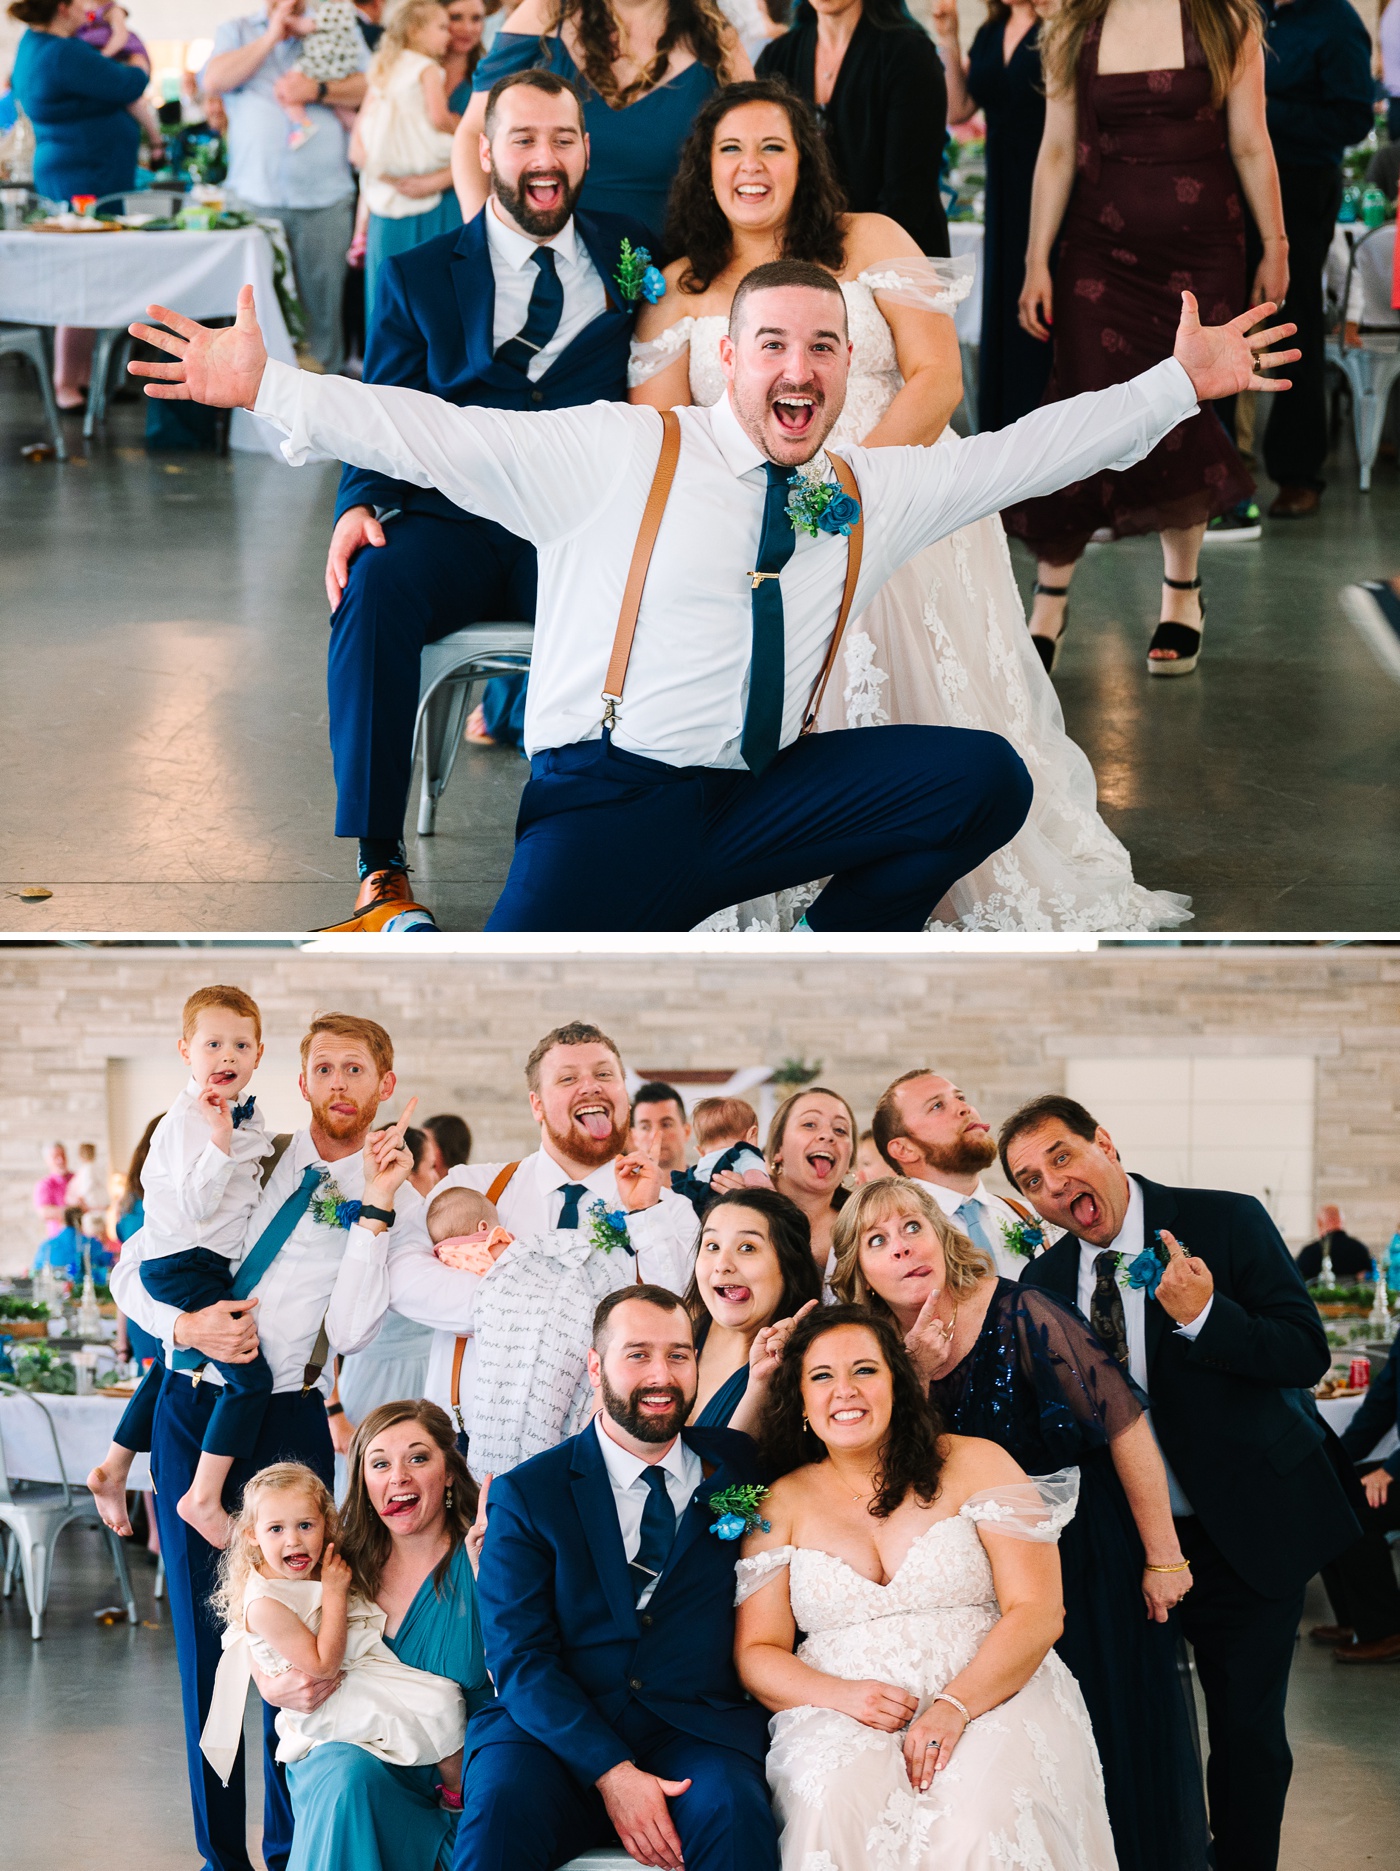 Group photo bomb wedding reception trend